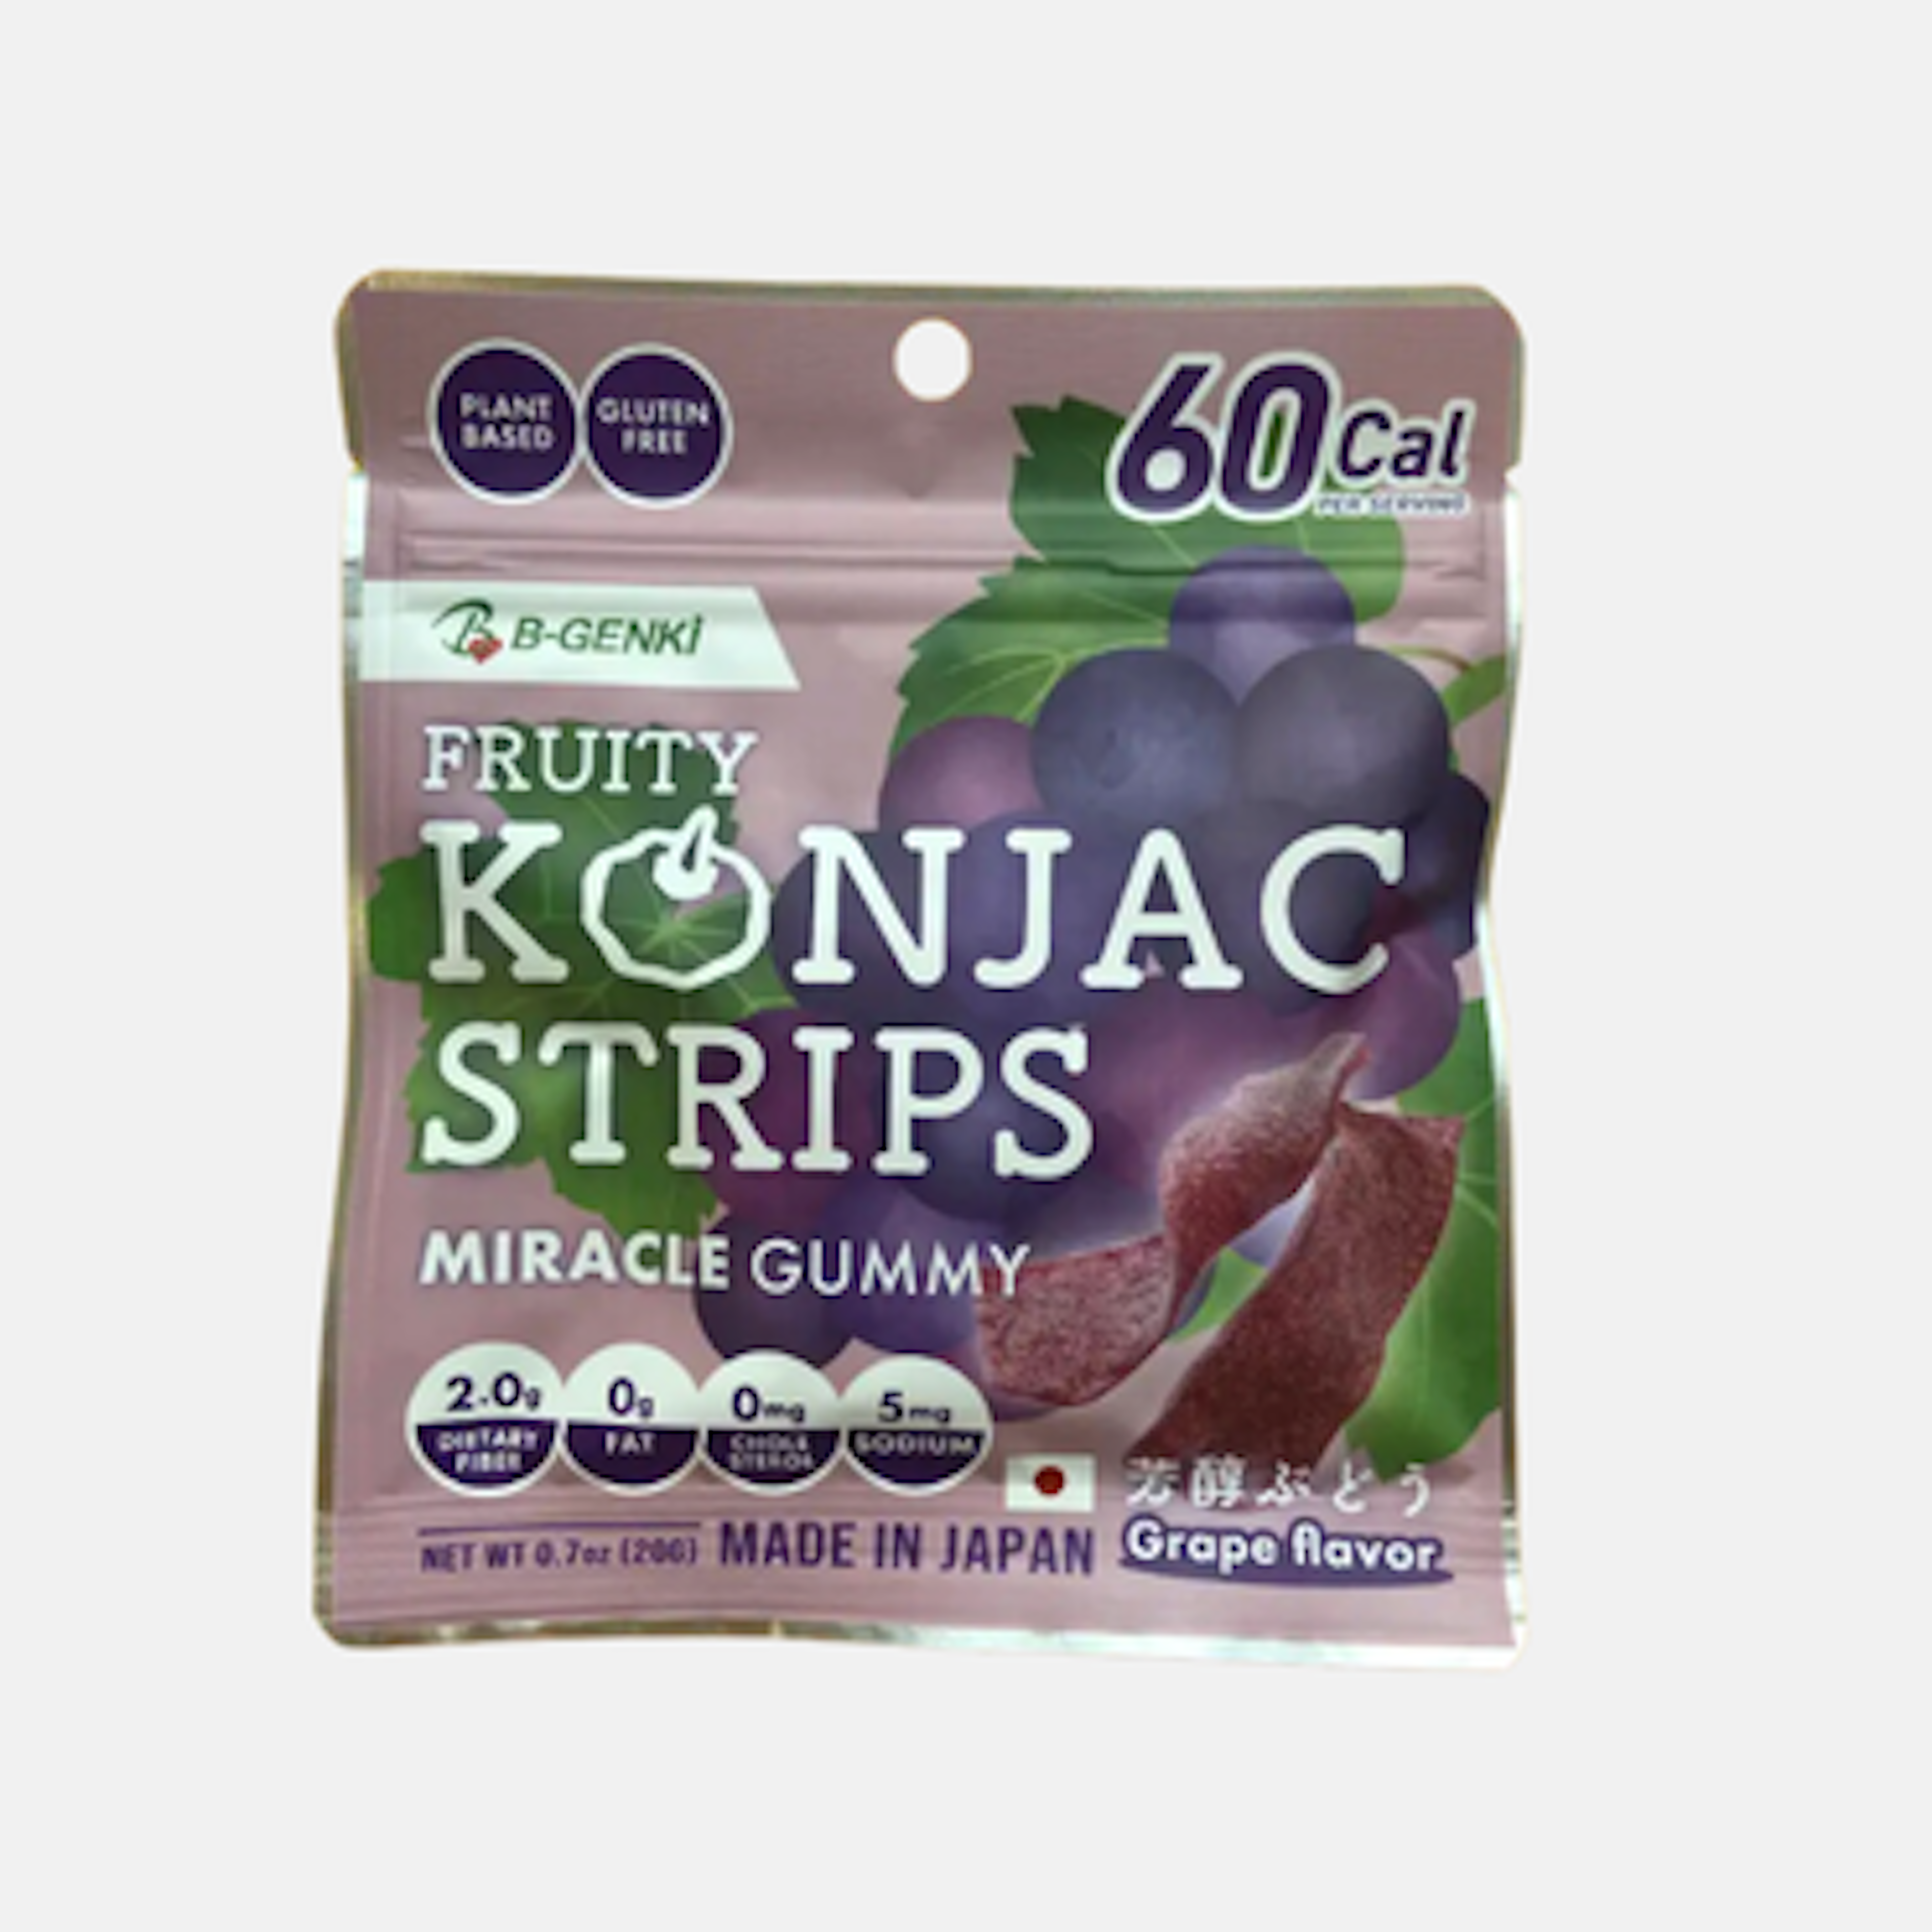 Marukin Fruity Konjac Strips Grape - Kalorienarmer und gesunder Konjak-Snack, 20g